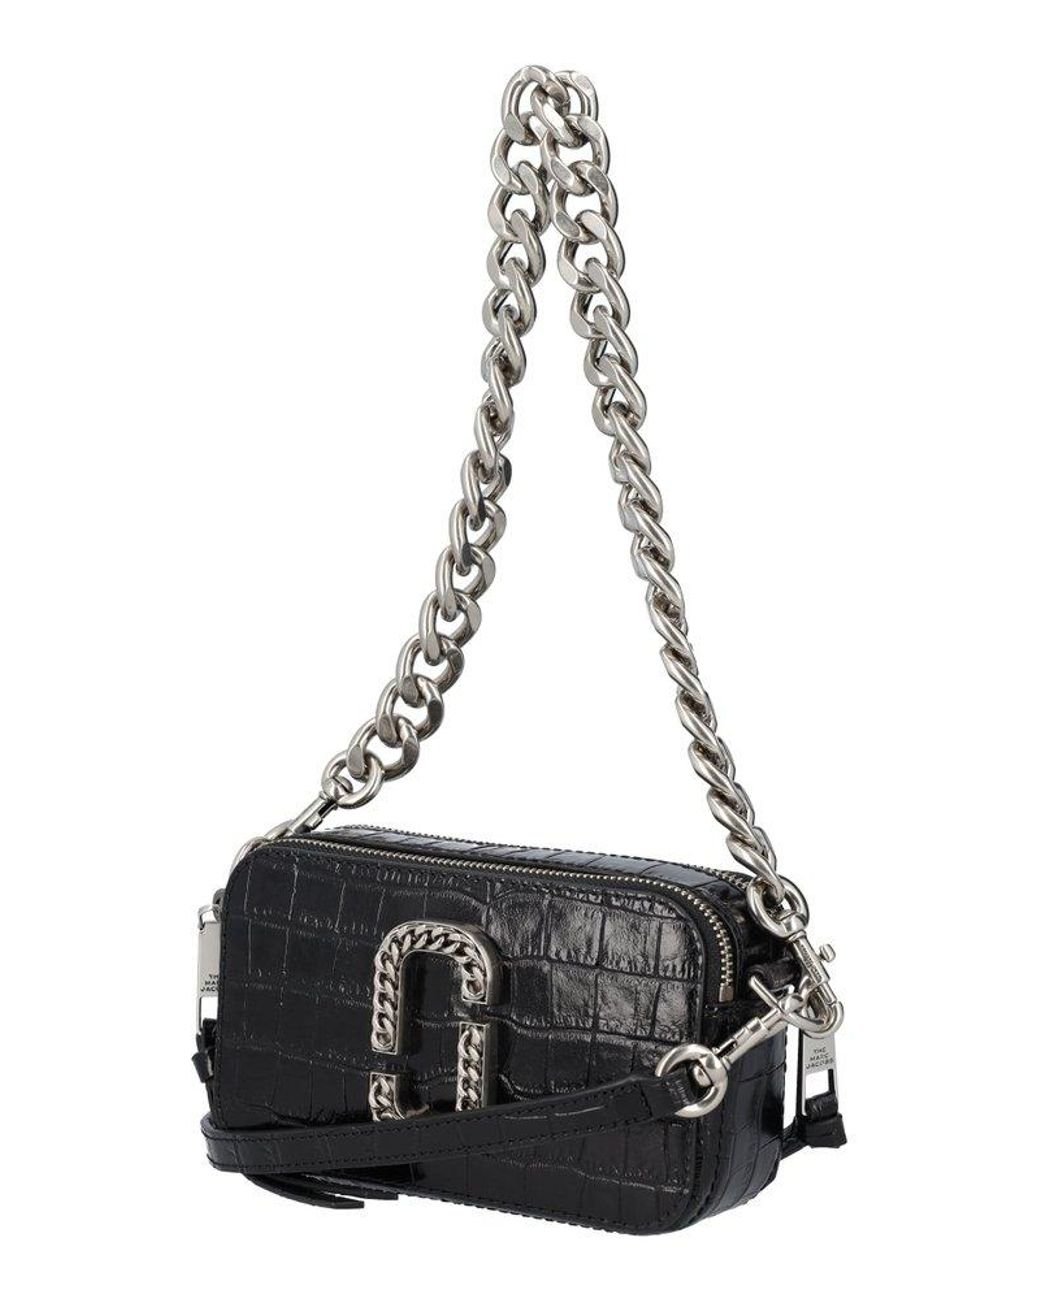 Marc Jacobs Snapshot Embossed Chain Link Shoulder Bag in Black